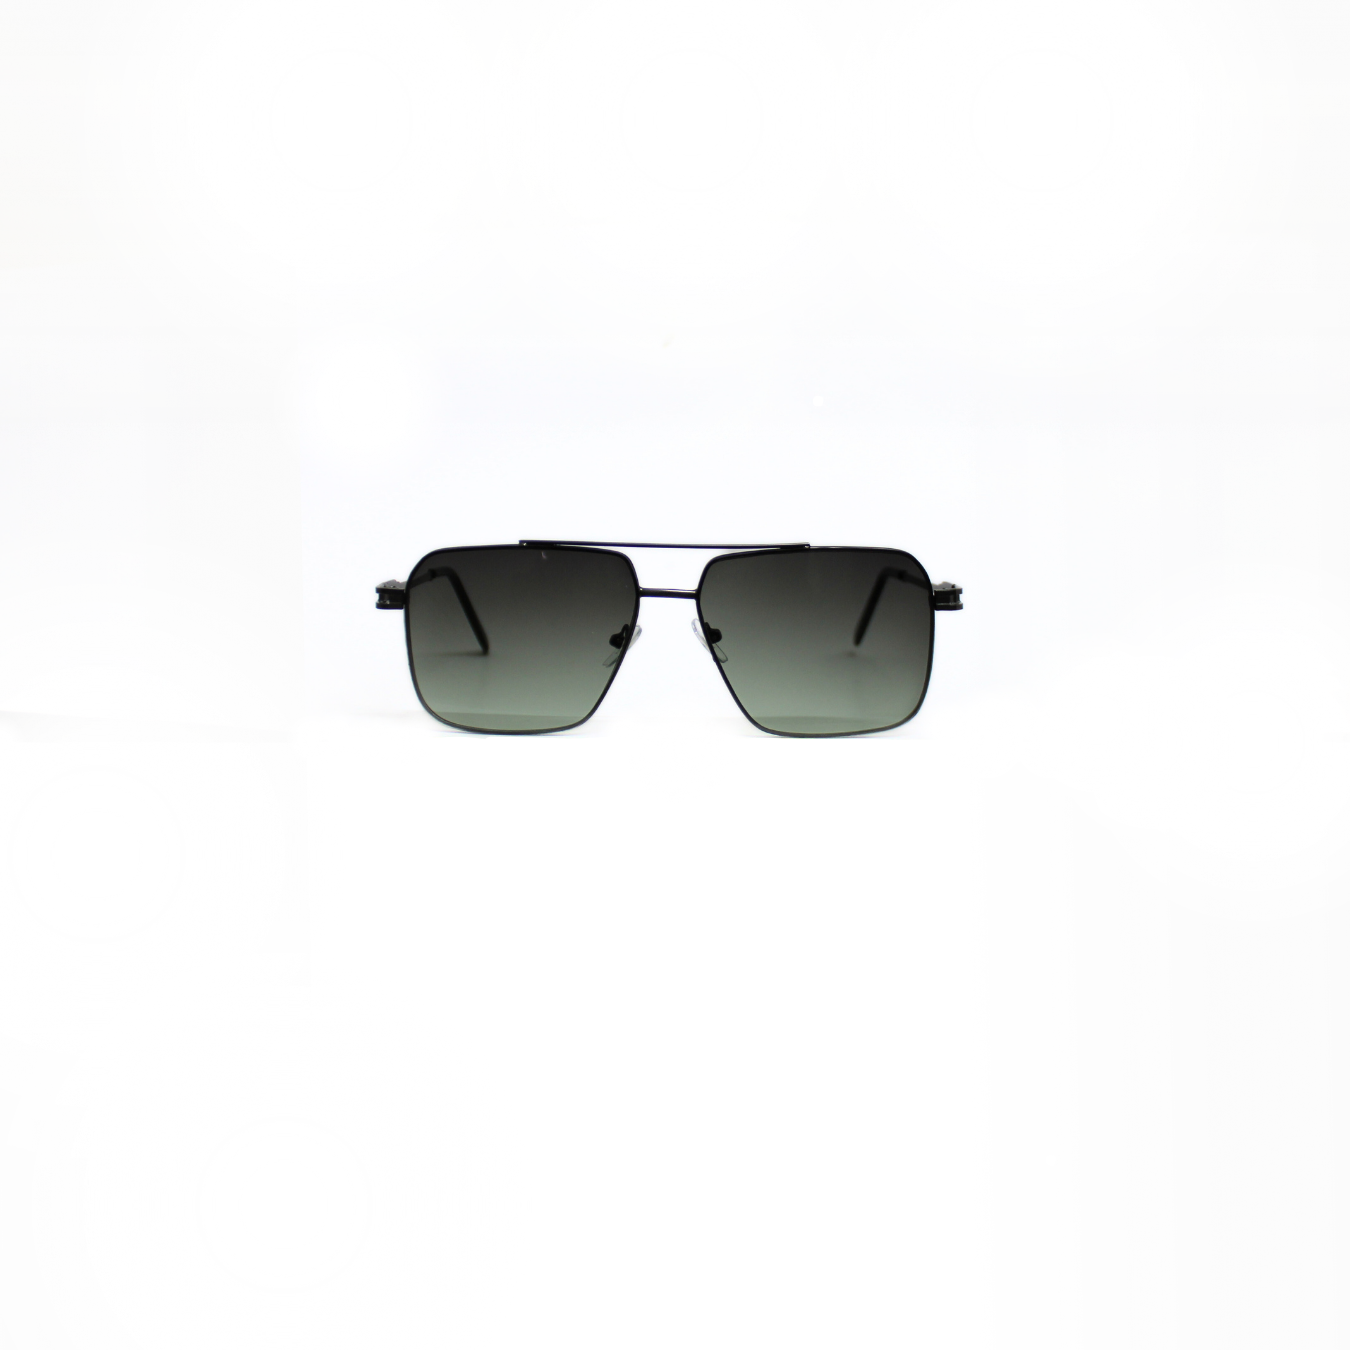 ARTHUR-II//003 I Sunglasses for Women - Specsview